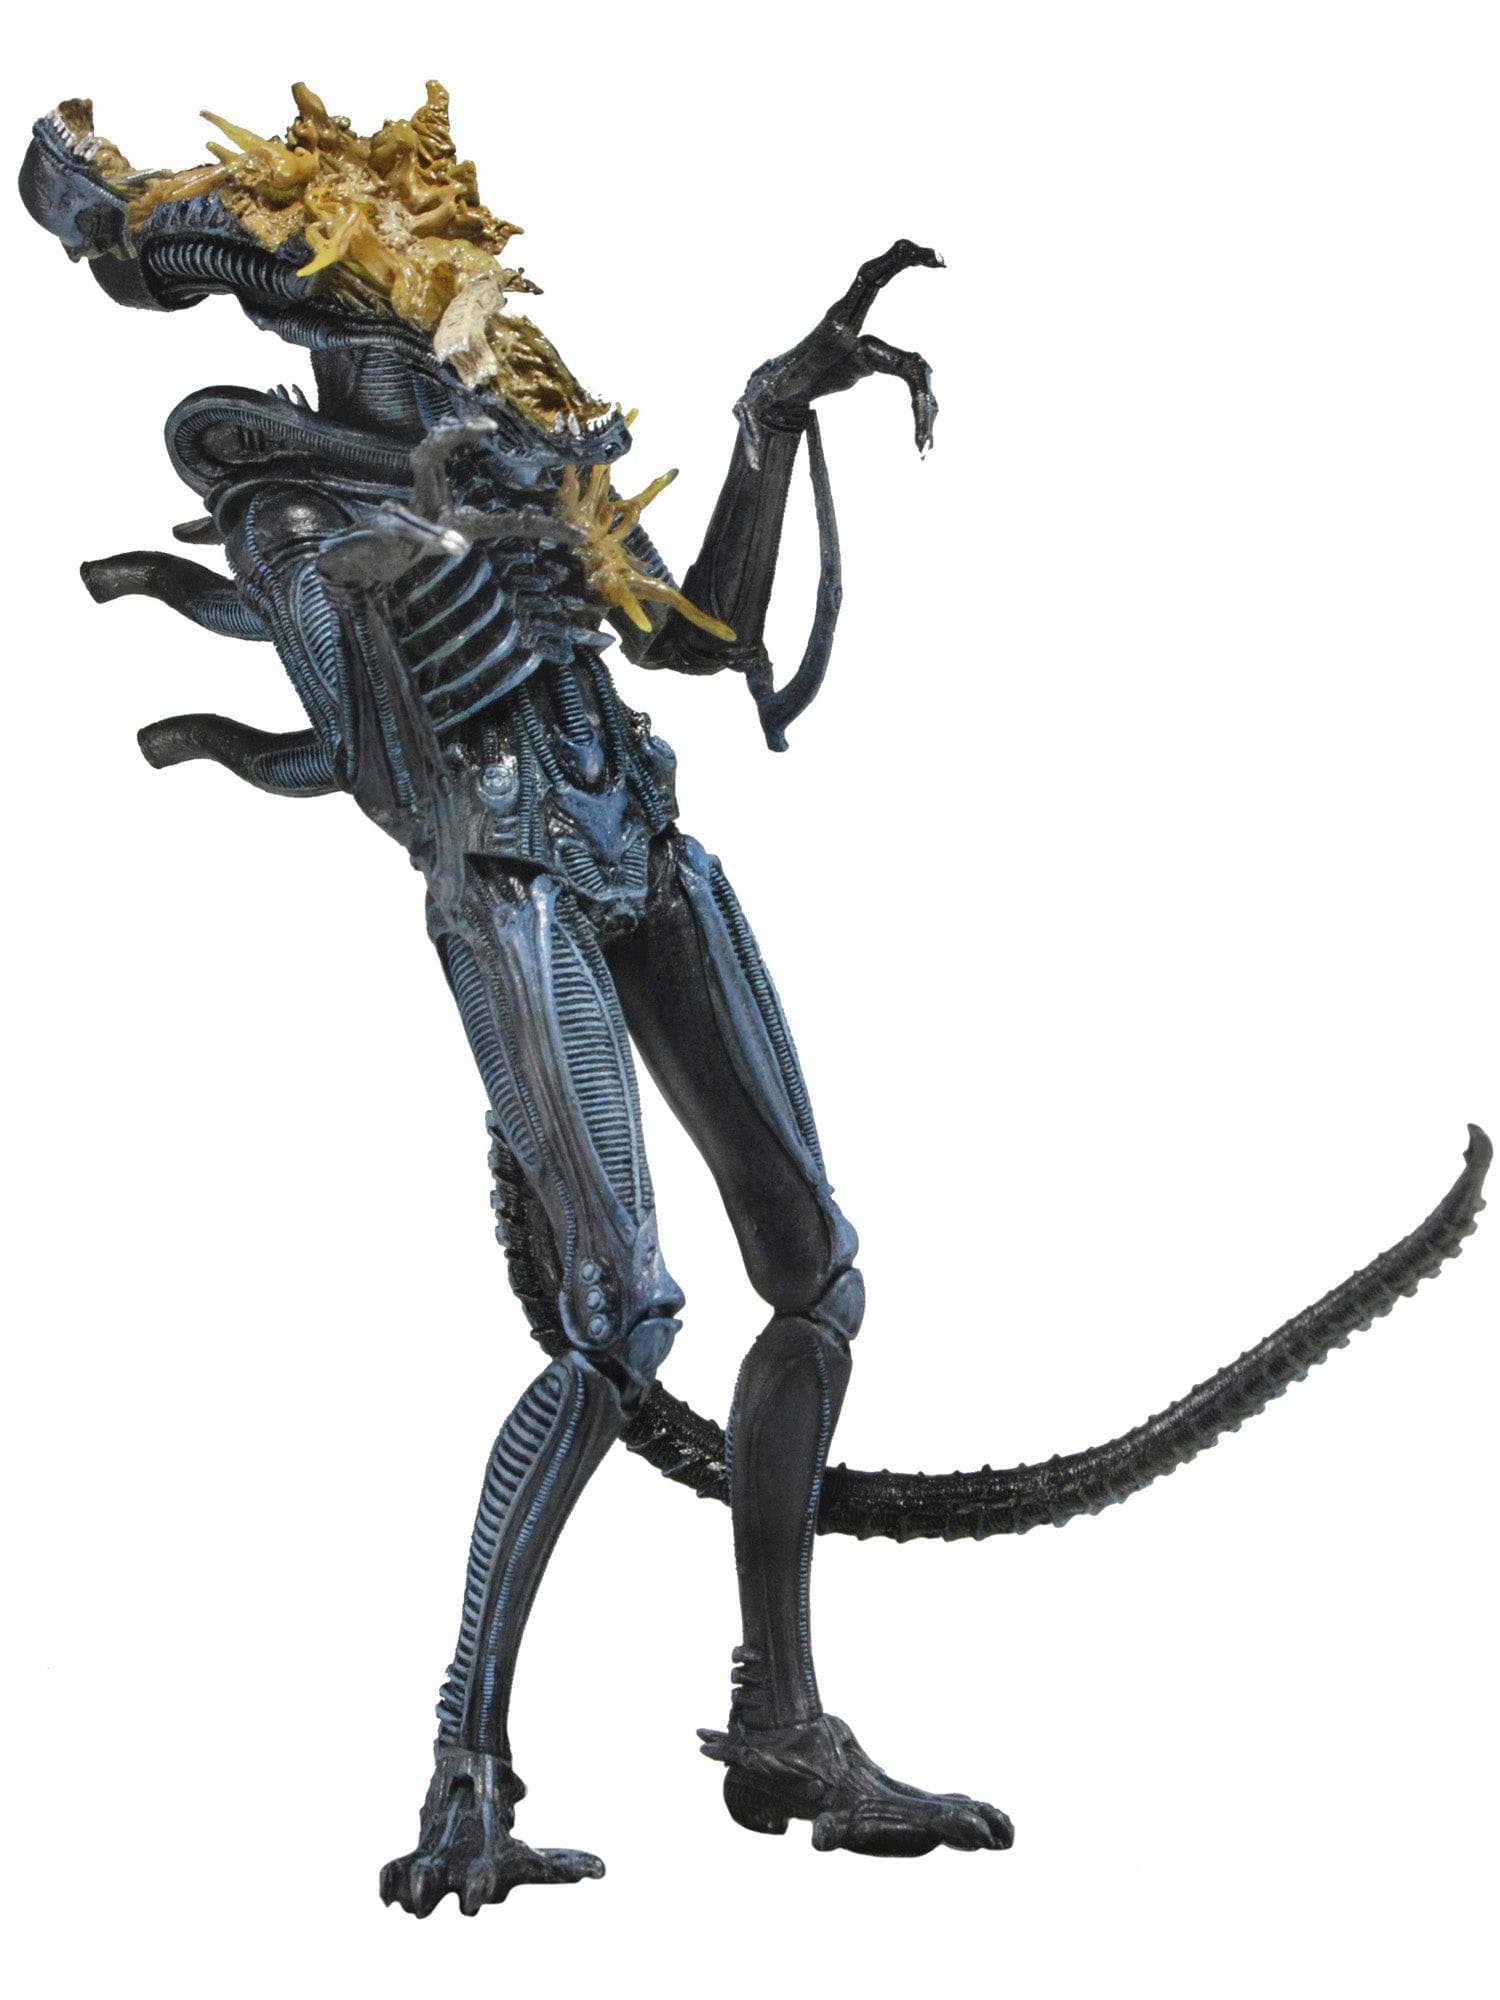 NECA - Alien - 7" Scale Action Figure - Series 12 Battle Damaged Warrior Blue - costumes.com